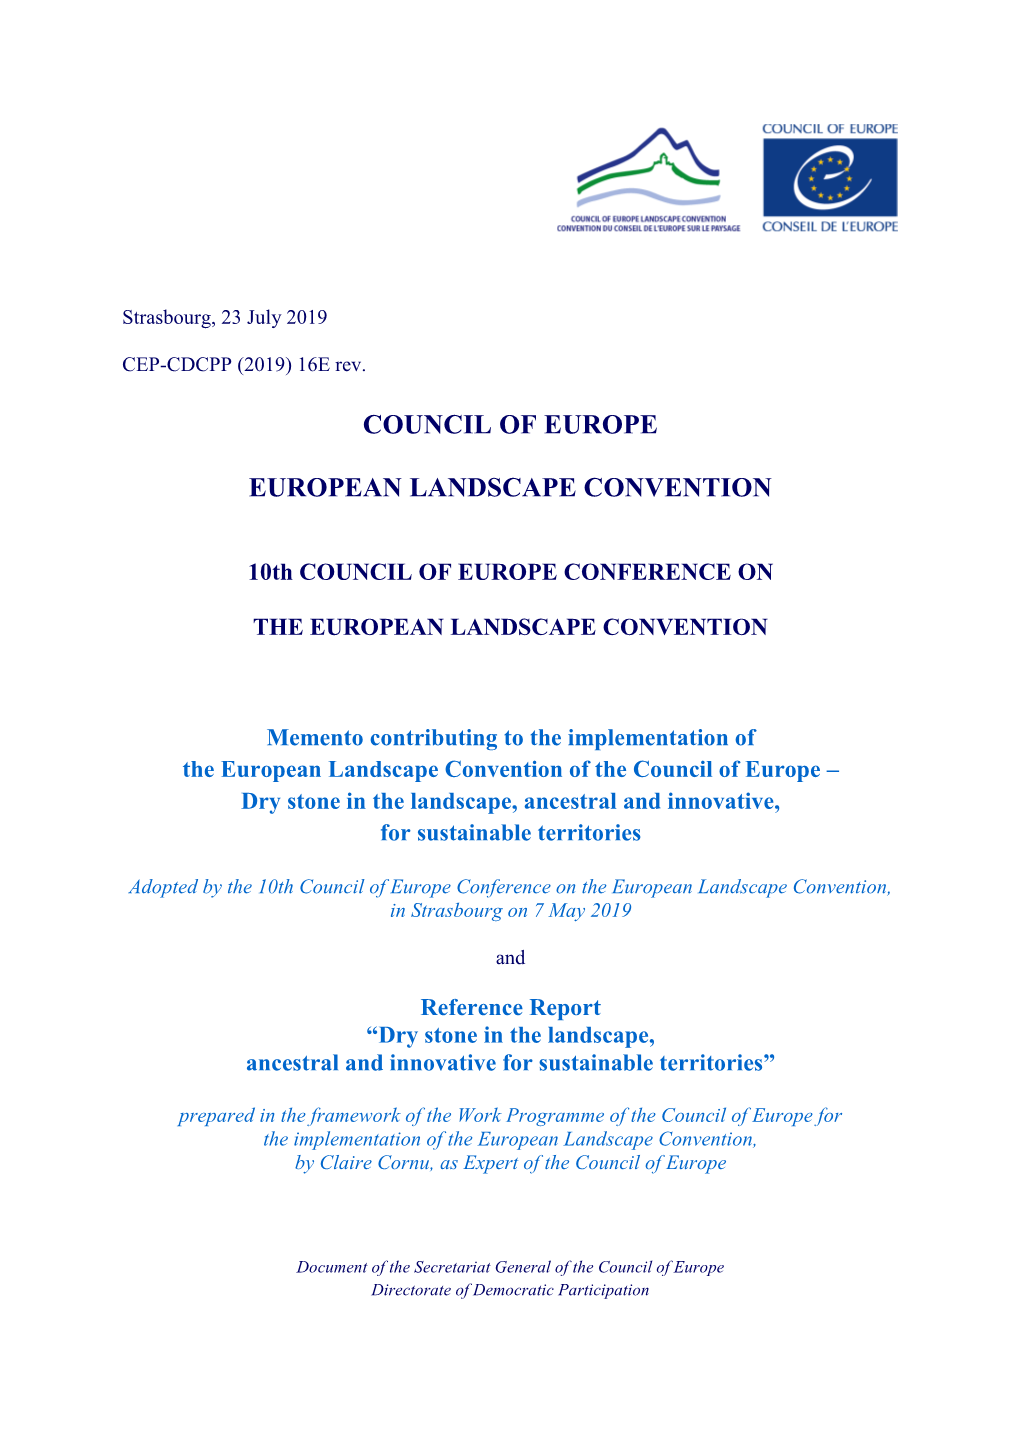 Council of Europe European Landscape Convention